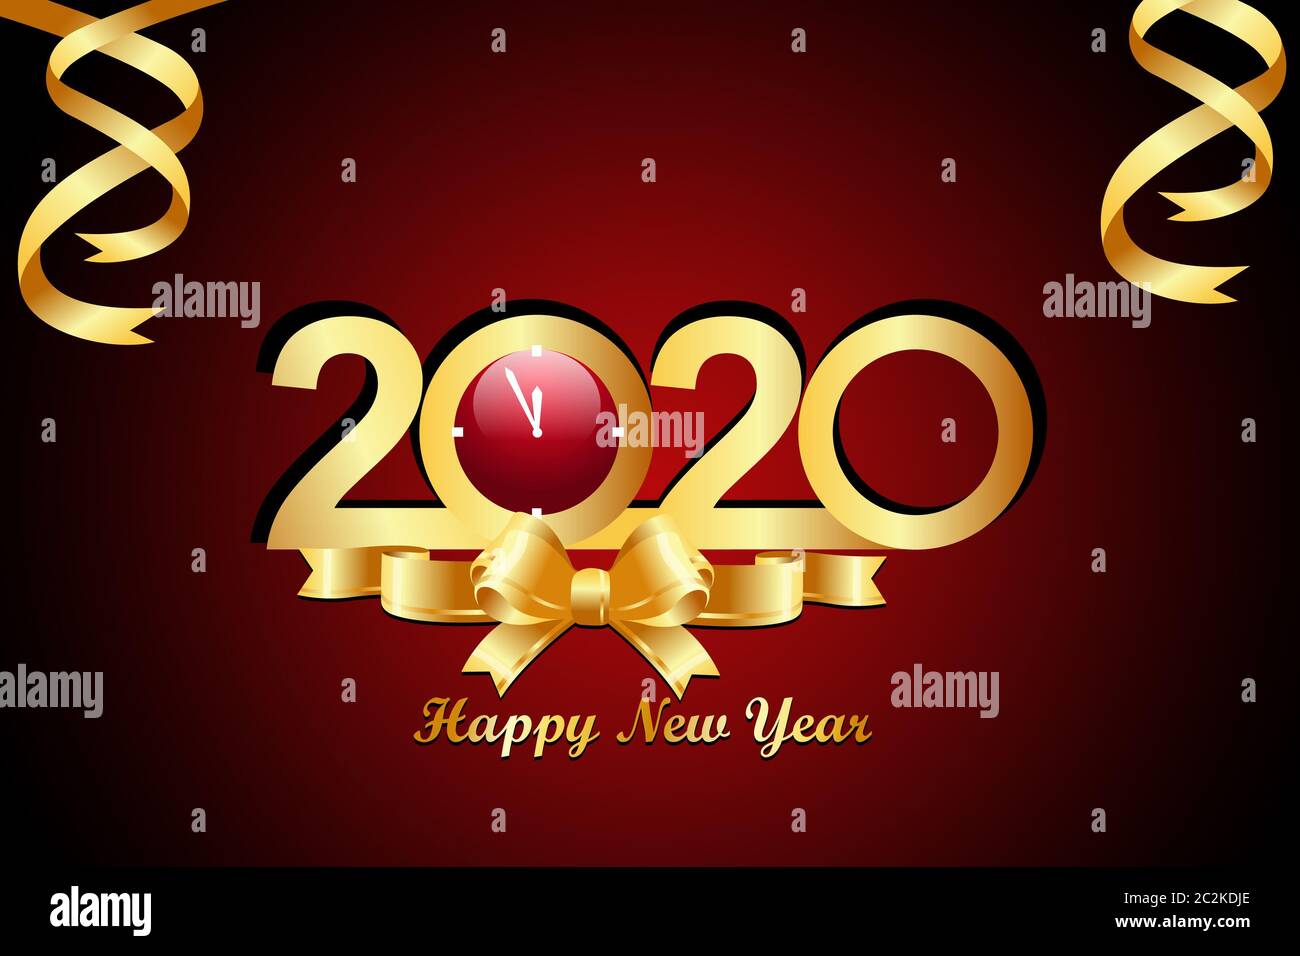 2020 happy new year celebration greetings Stock Photo